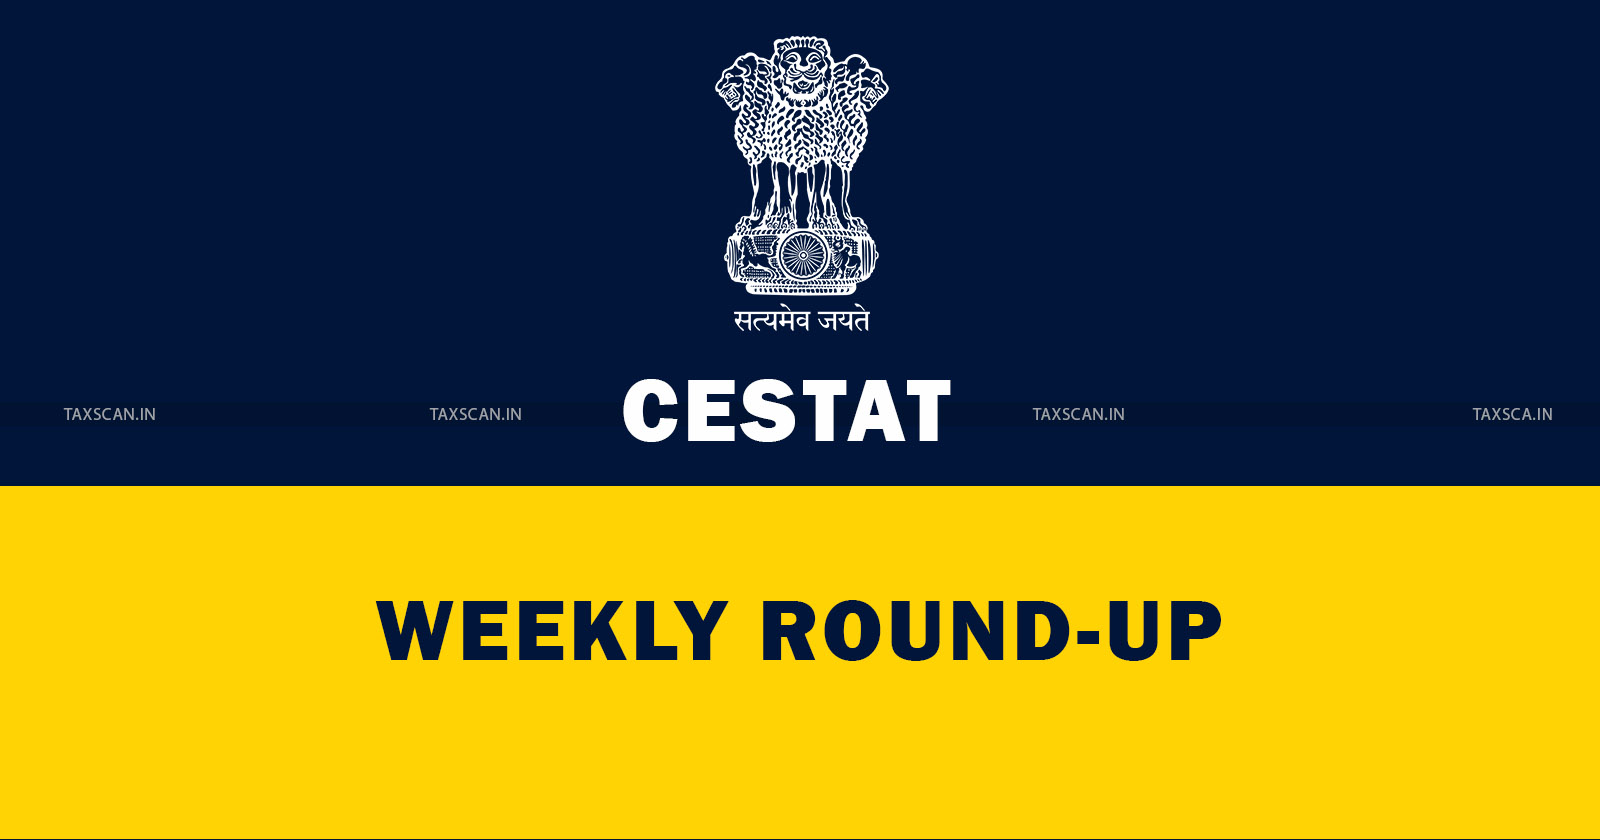 CESTAT - CESTAT Weekly Round up - Weekly Round up - CESTAT Weekly news - Customs and Excise weekly news - TAXSCAN